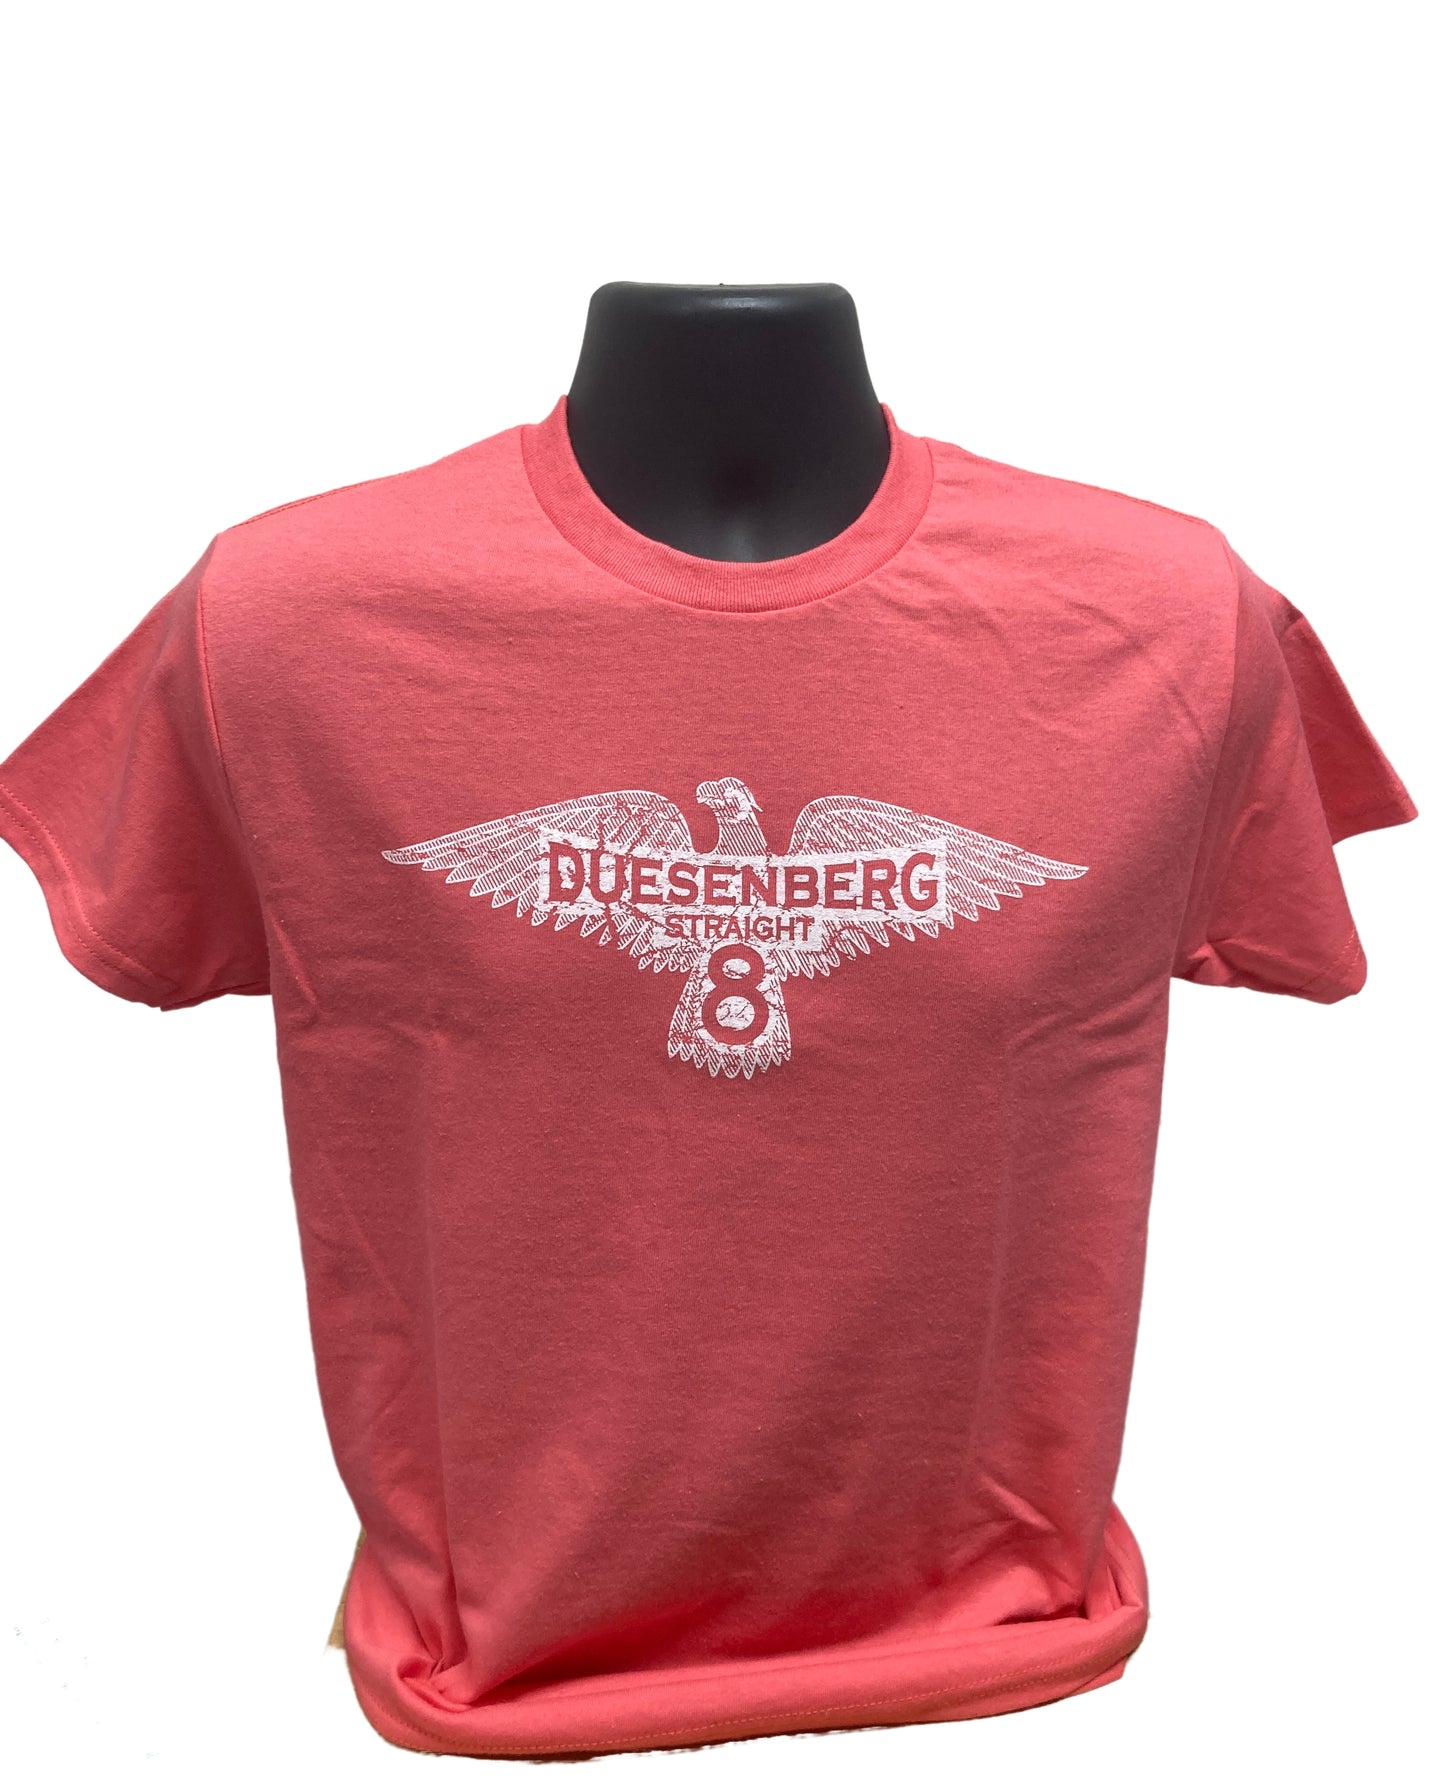 Duesenberg Logo  T-Shirt NEW COLORS! More sizes!